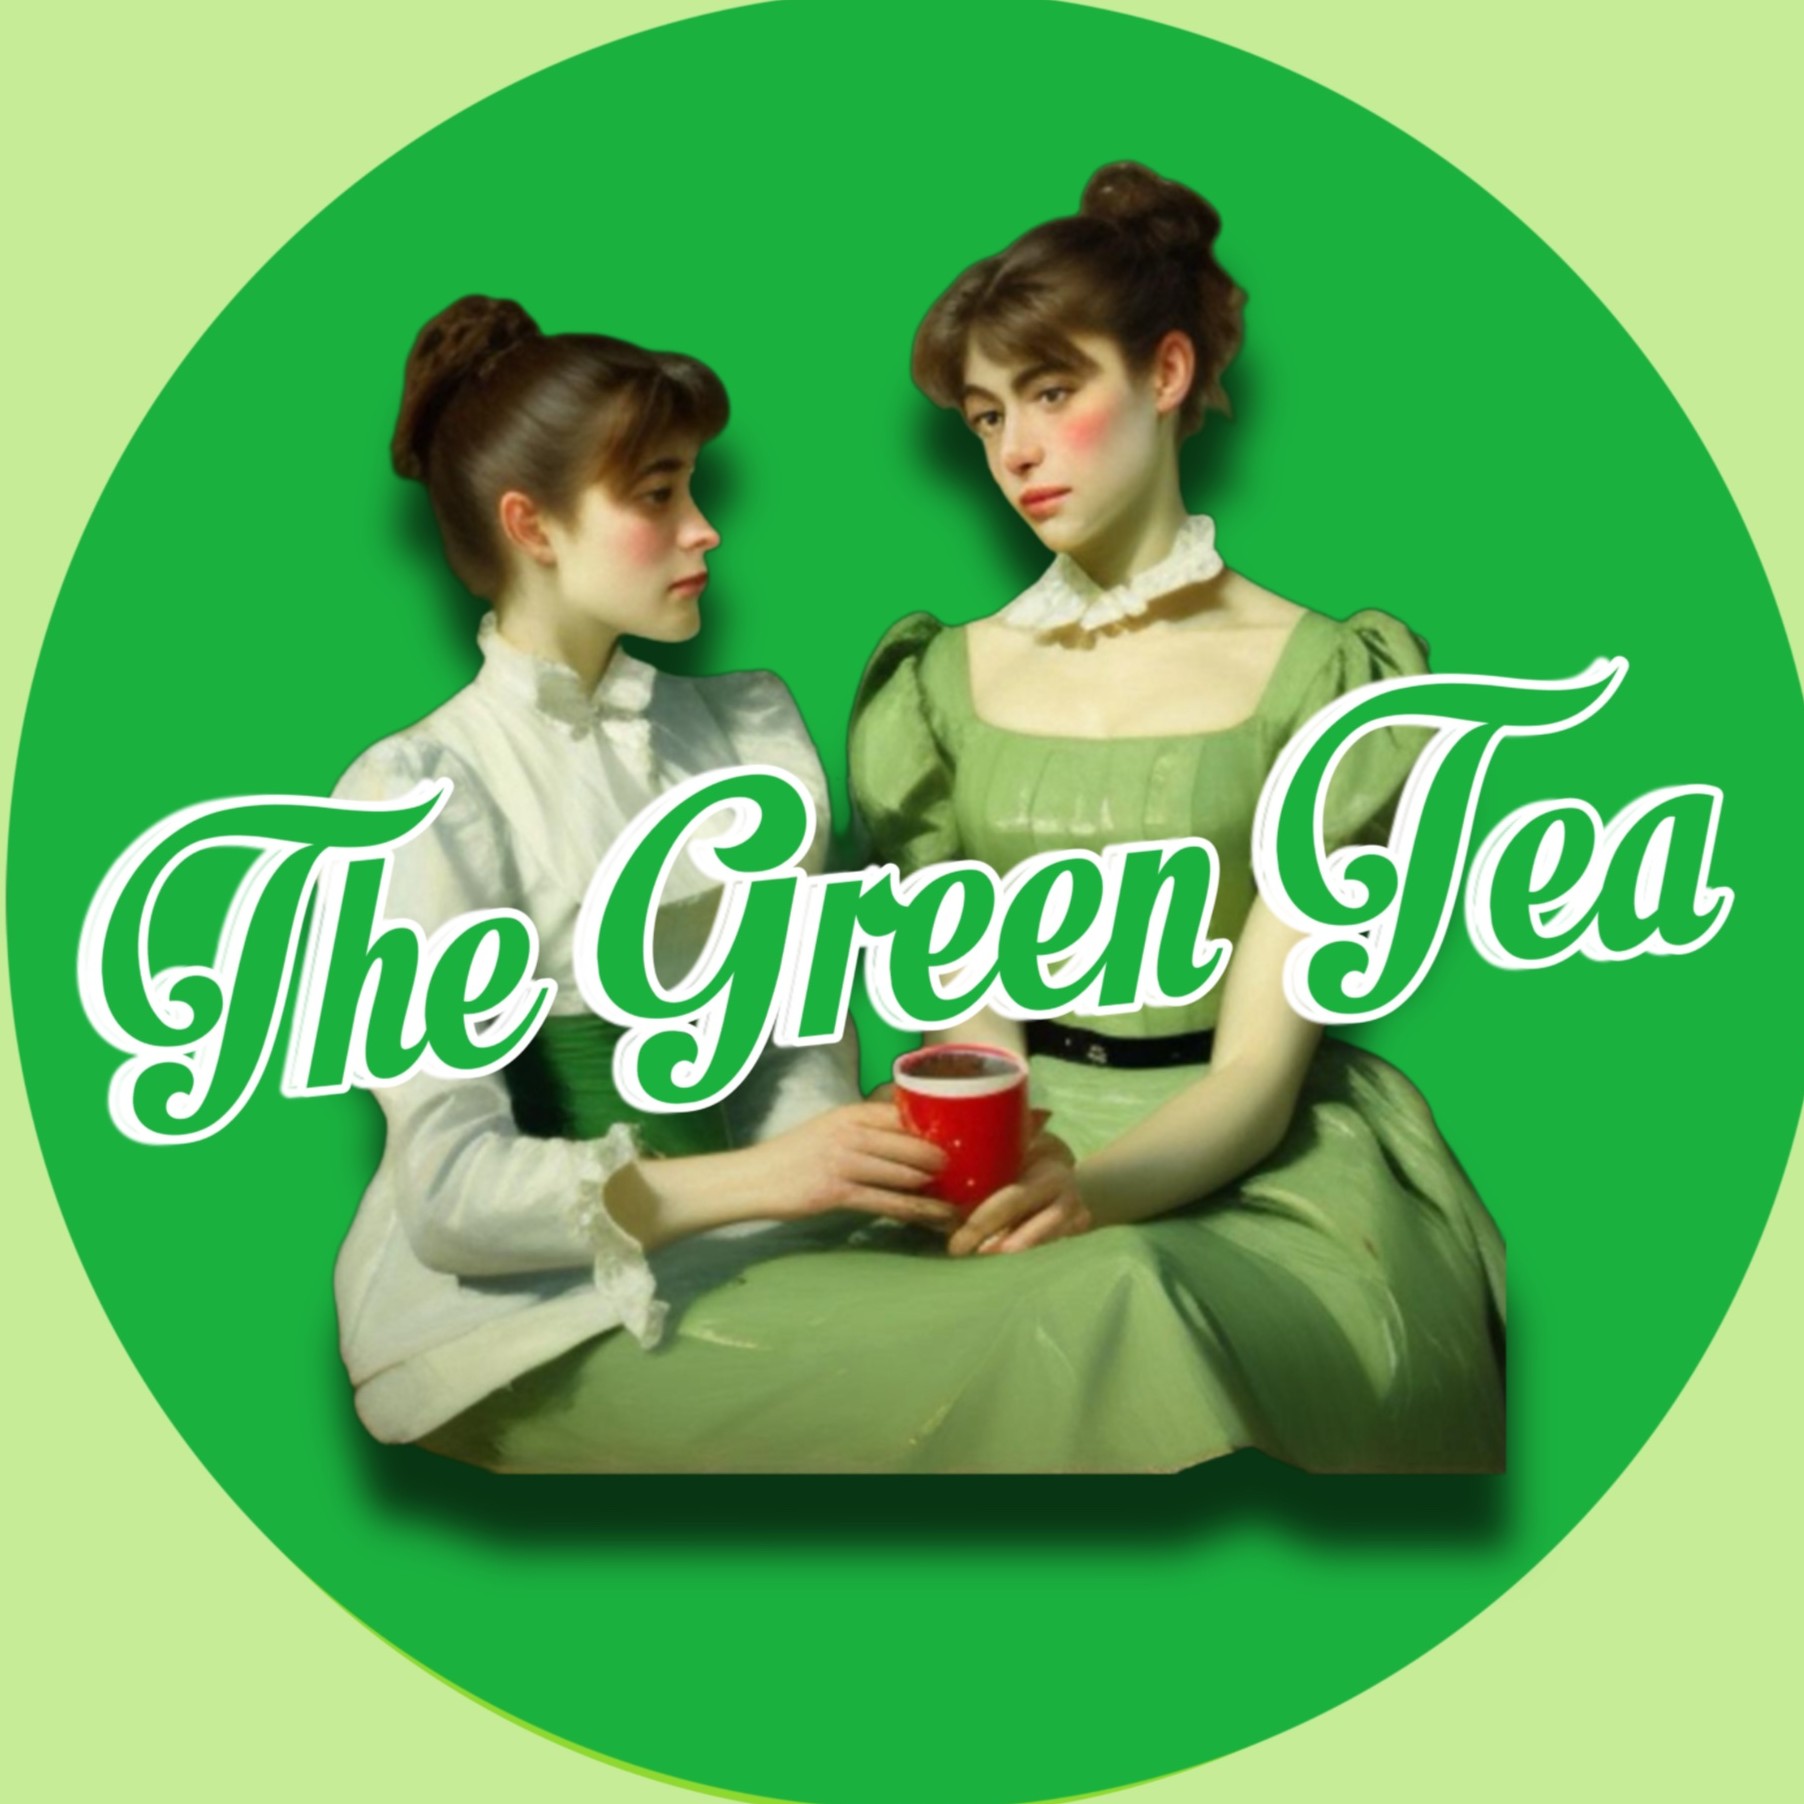 The Green Tea